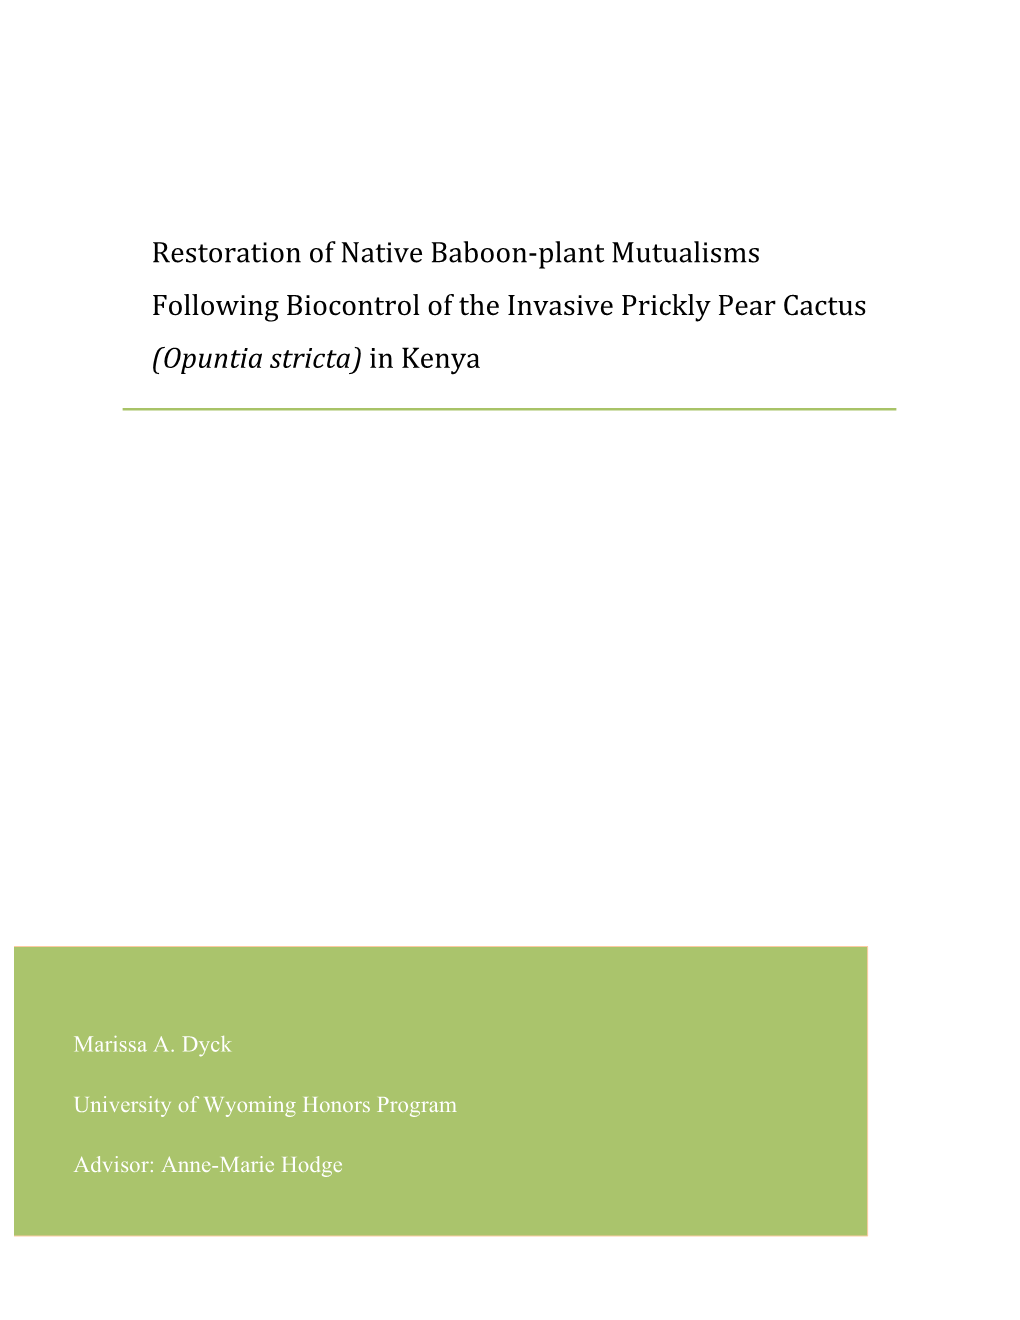 Restoration of Native Baboon-‐Plant Mutualisms Following Biocontrol Of